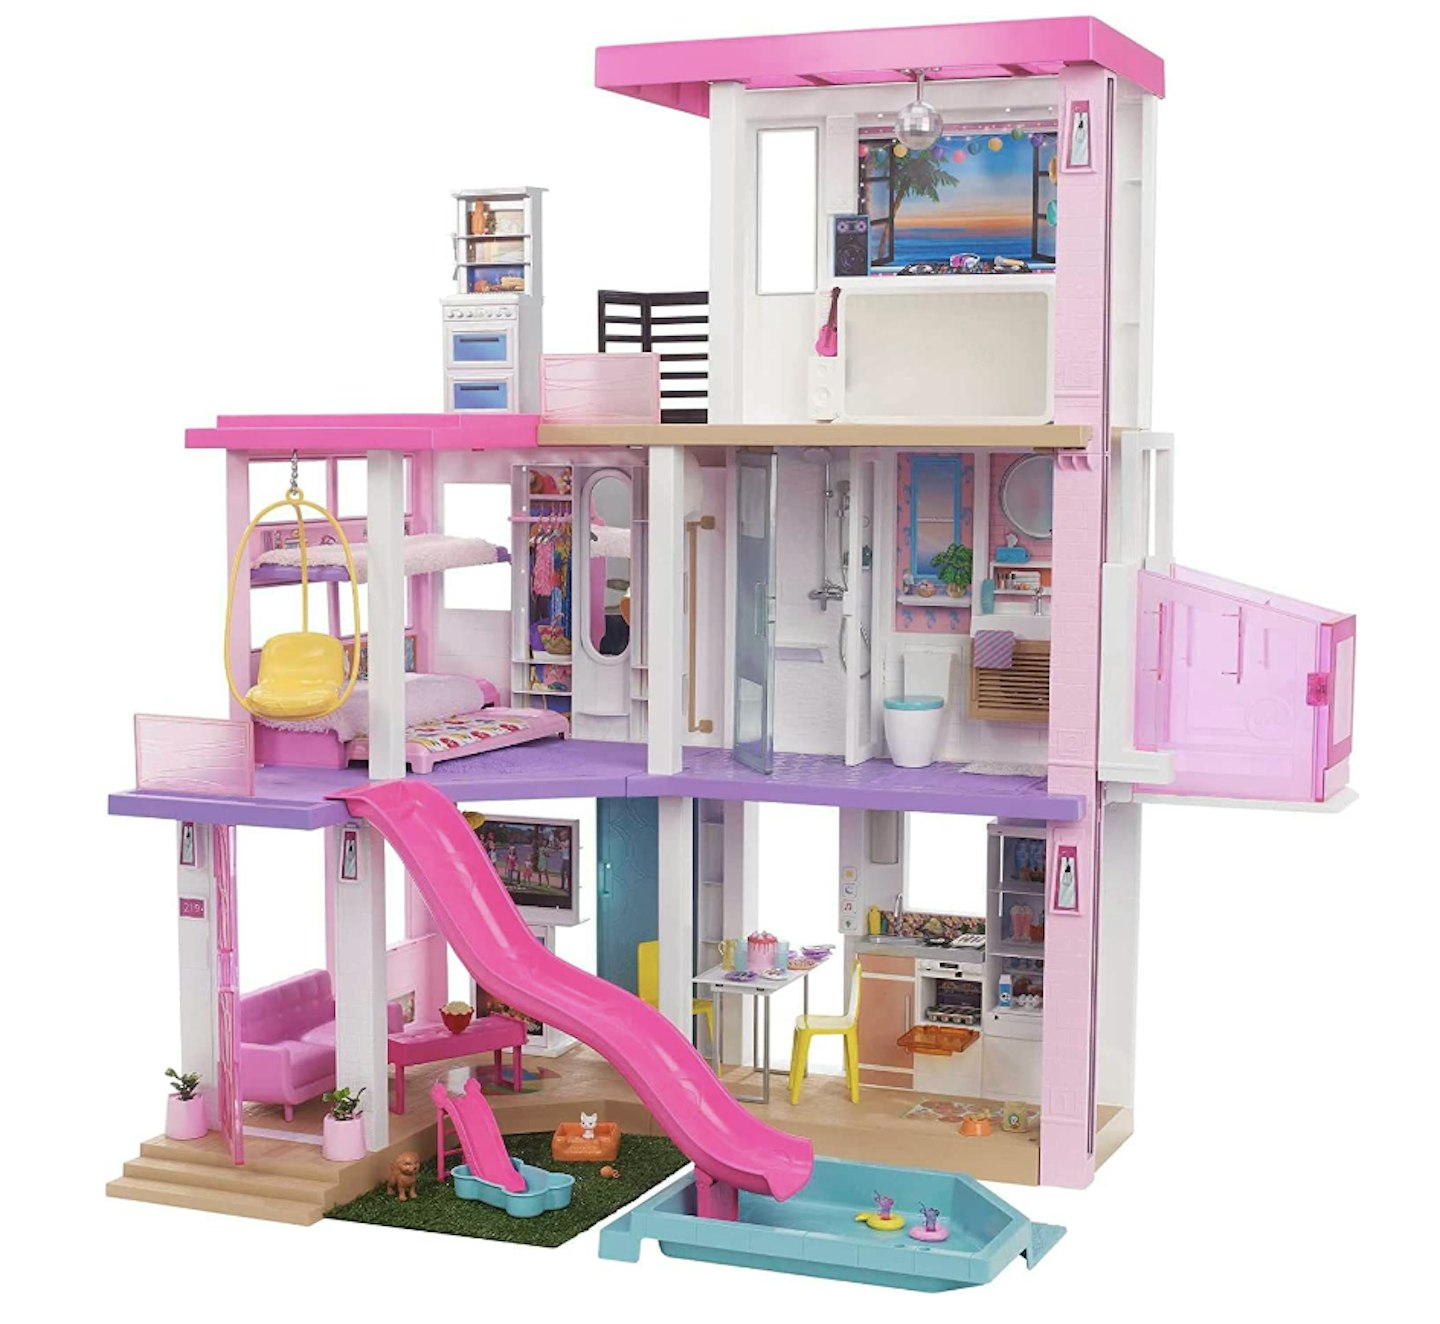 Barbie Dreamhouse Dollhouse Playset with Pool & Slide